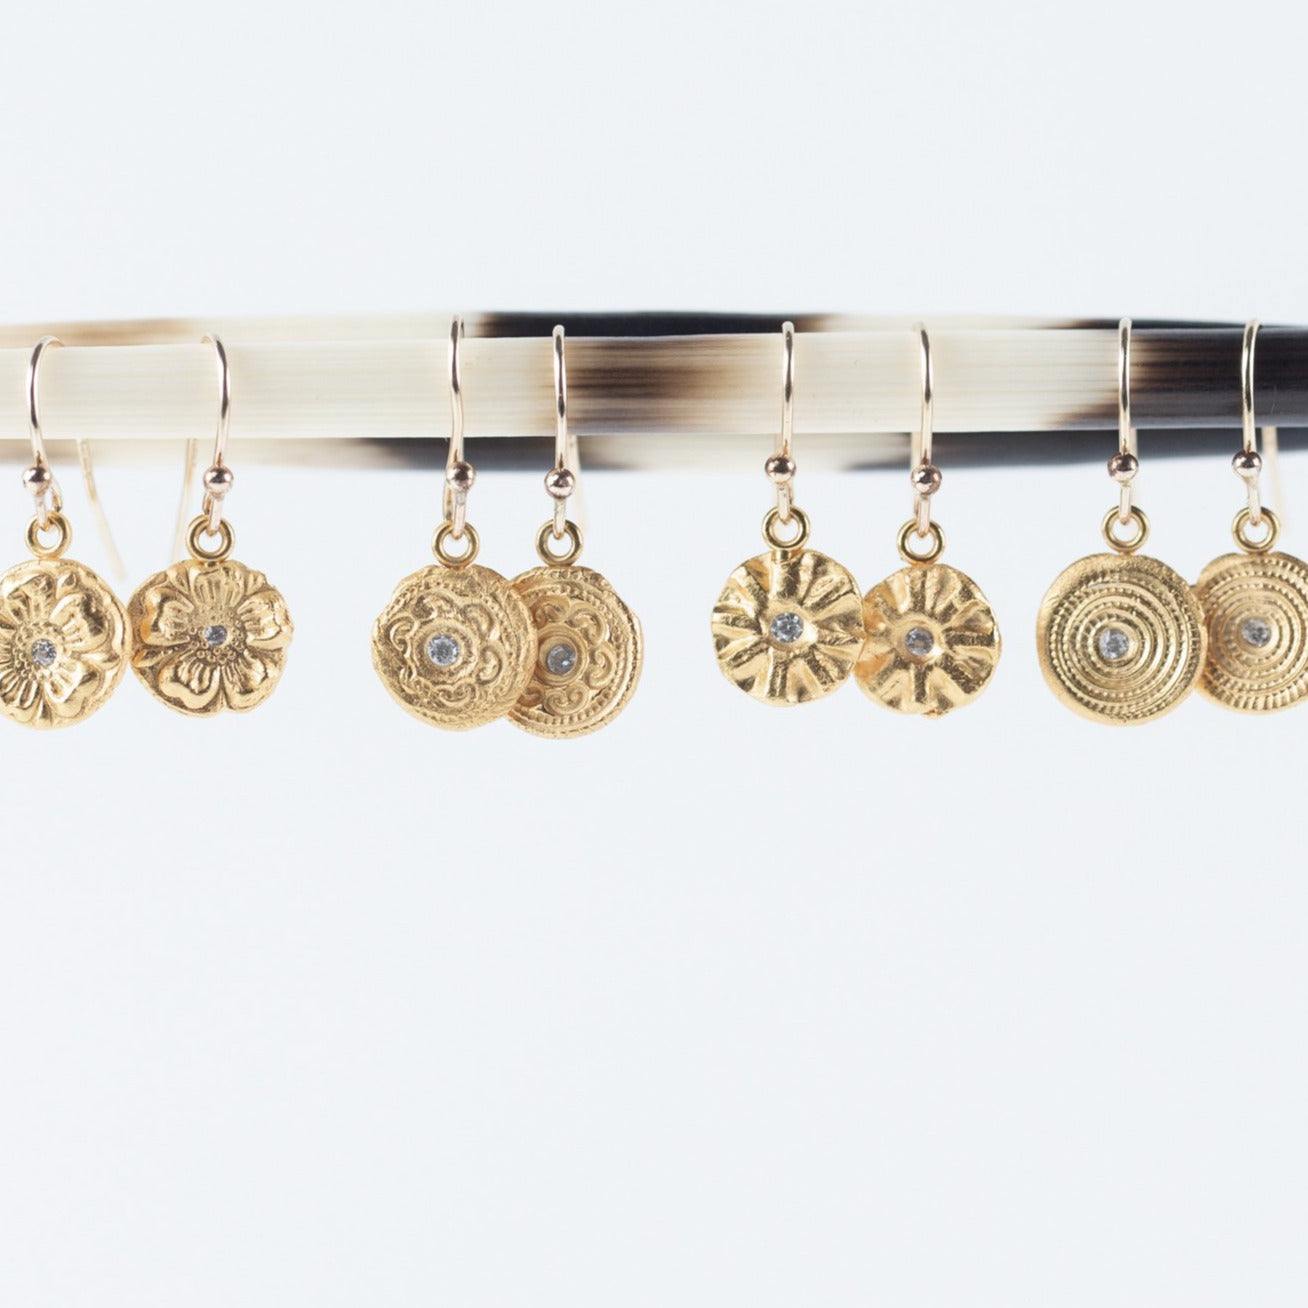 Circles of Life Hanging Earrings Gold - MAS Designs